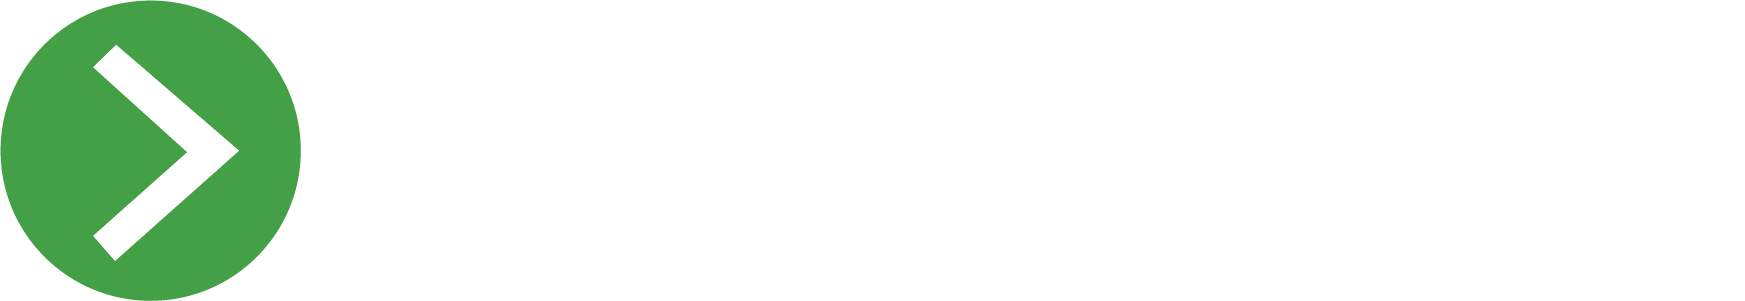 careersafe logo